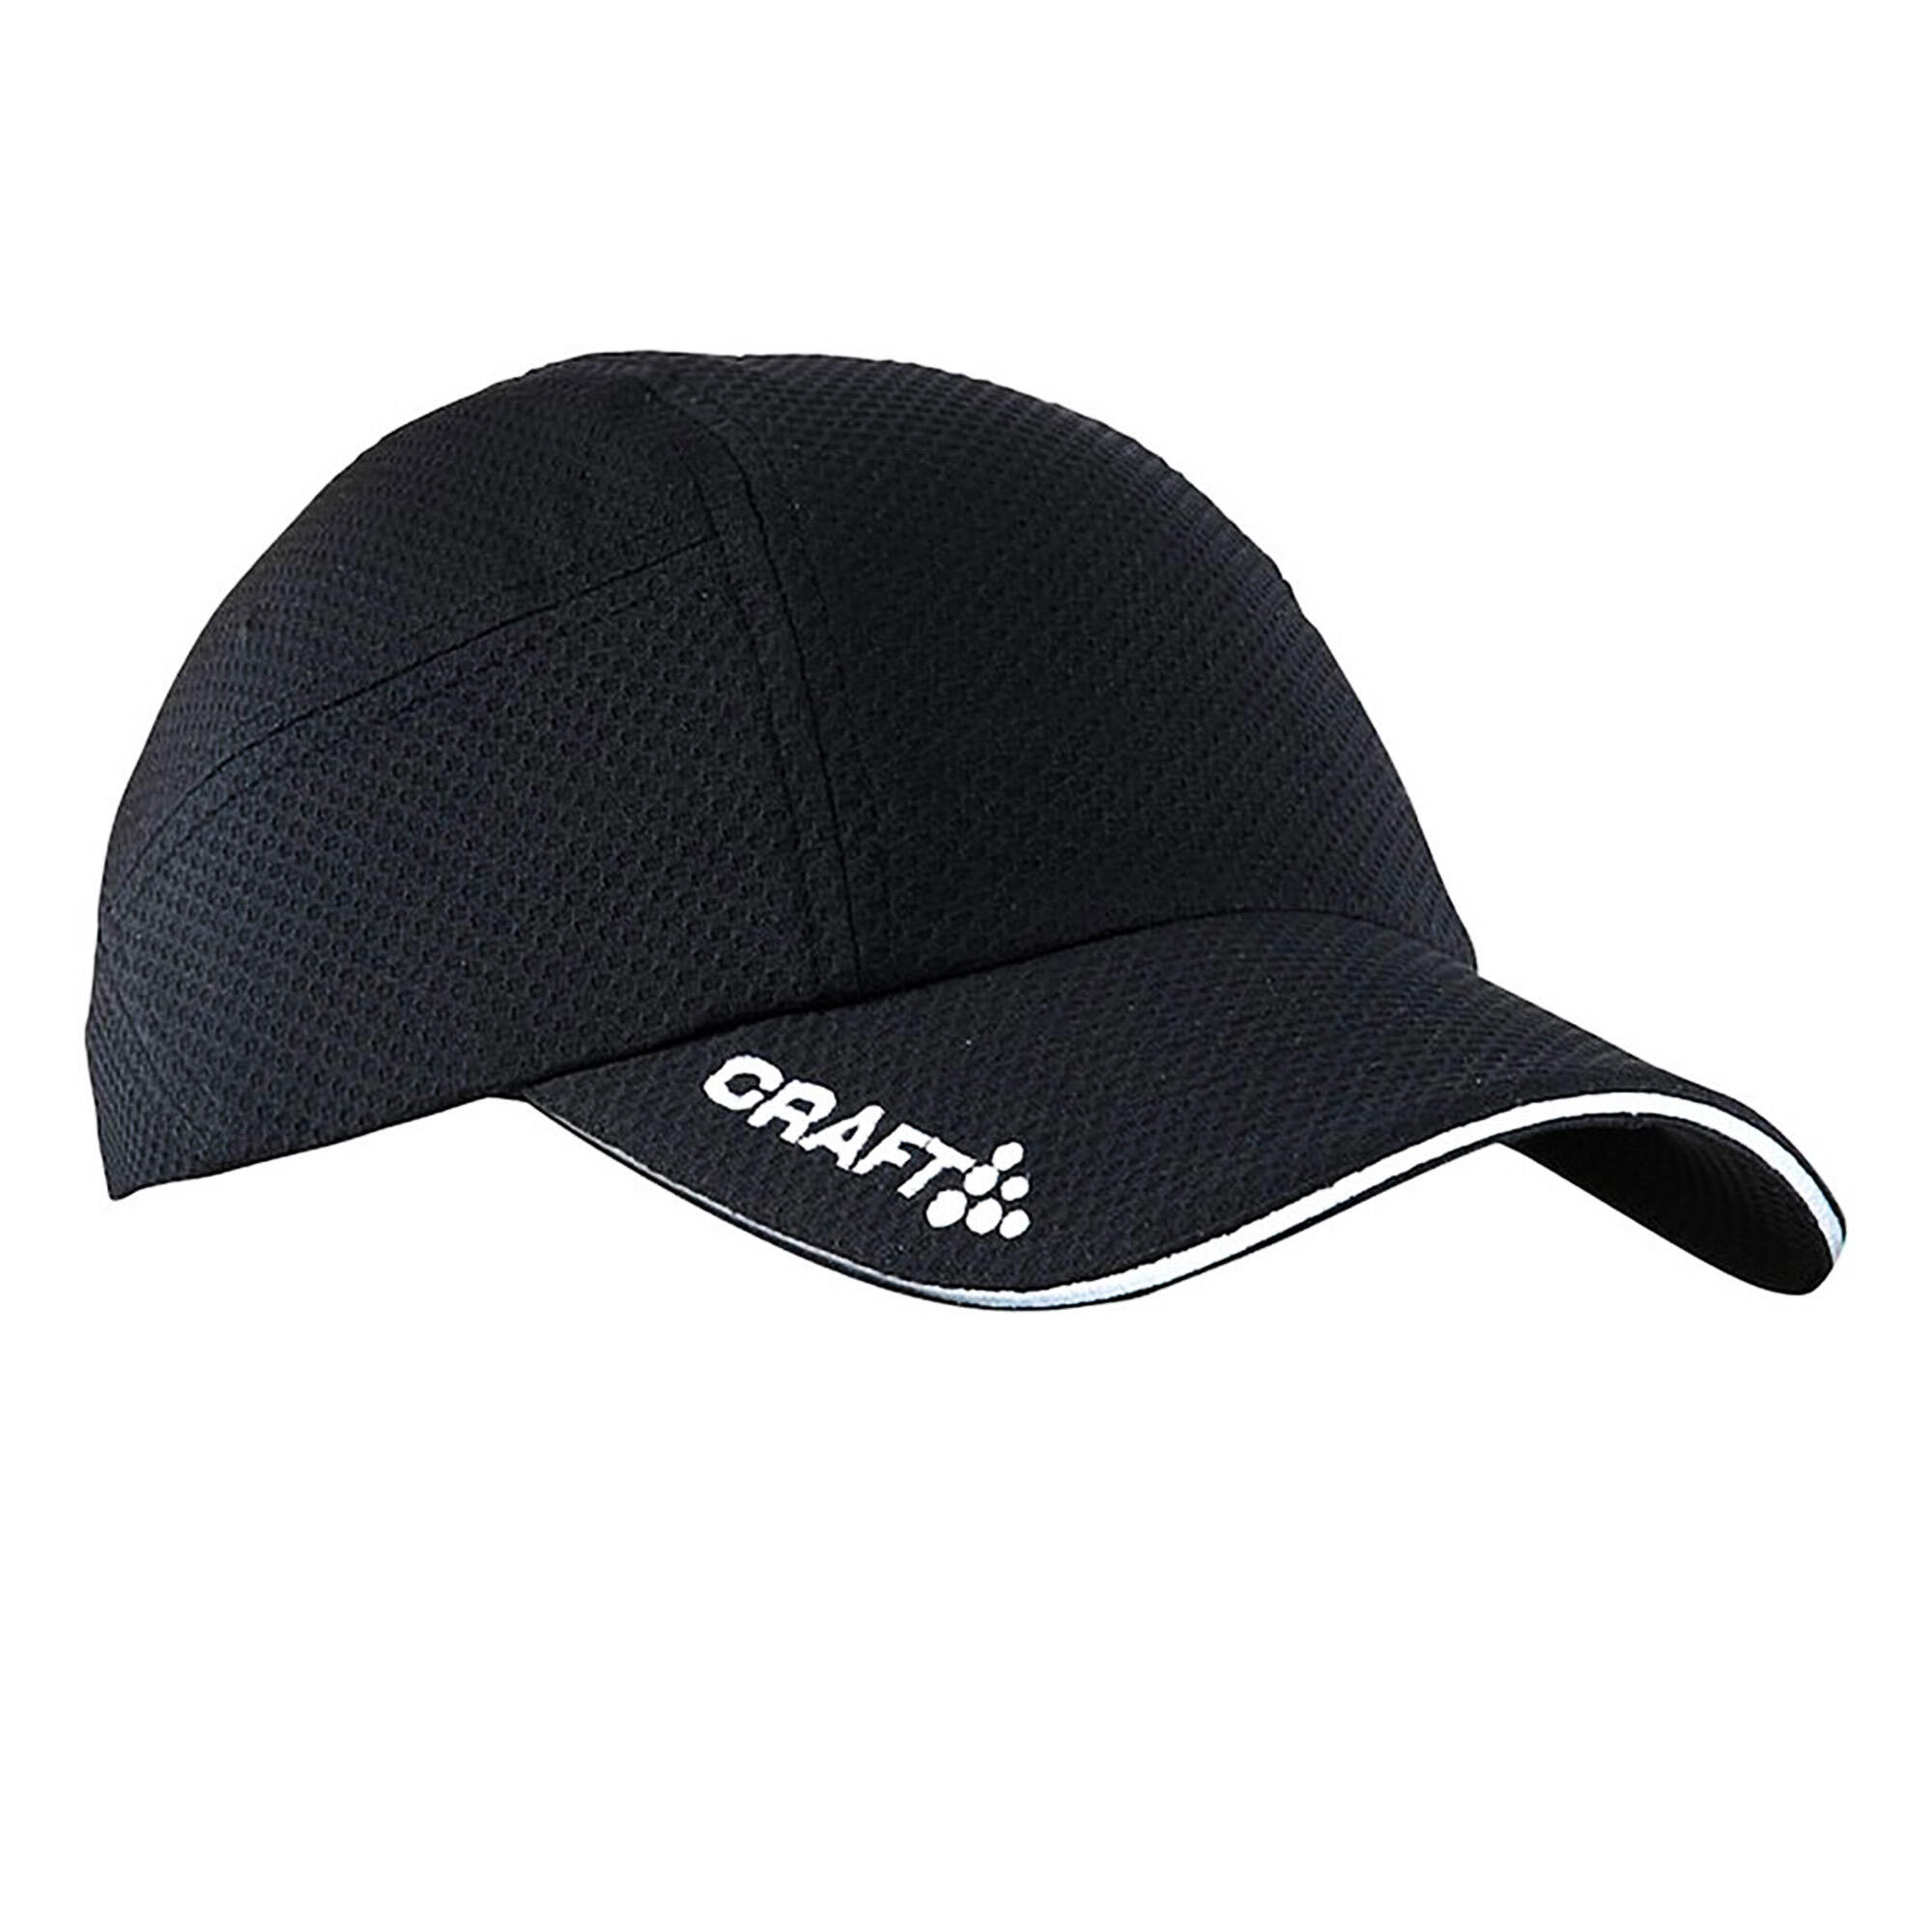 CRAFT Unisex Adult Running Baseball Cap (Black)